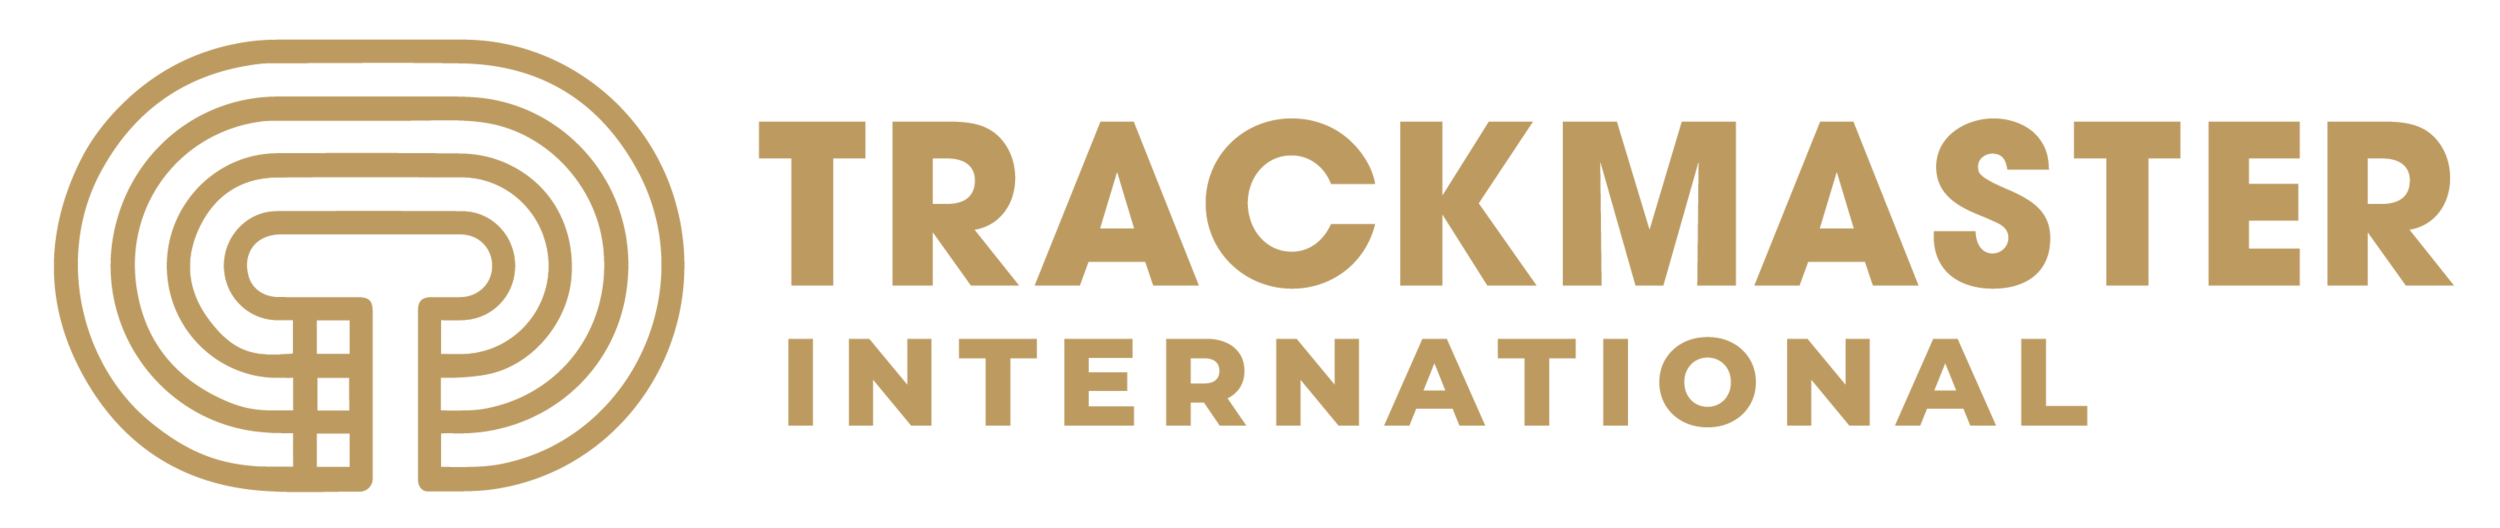 Trackmaster International